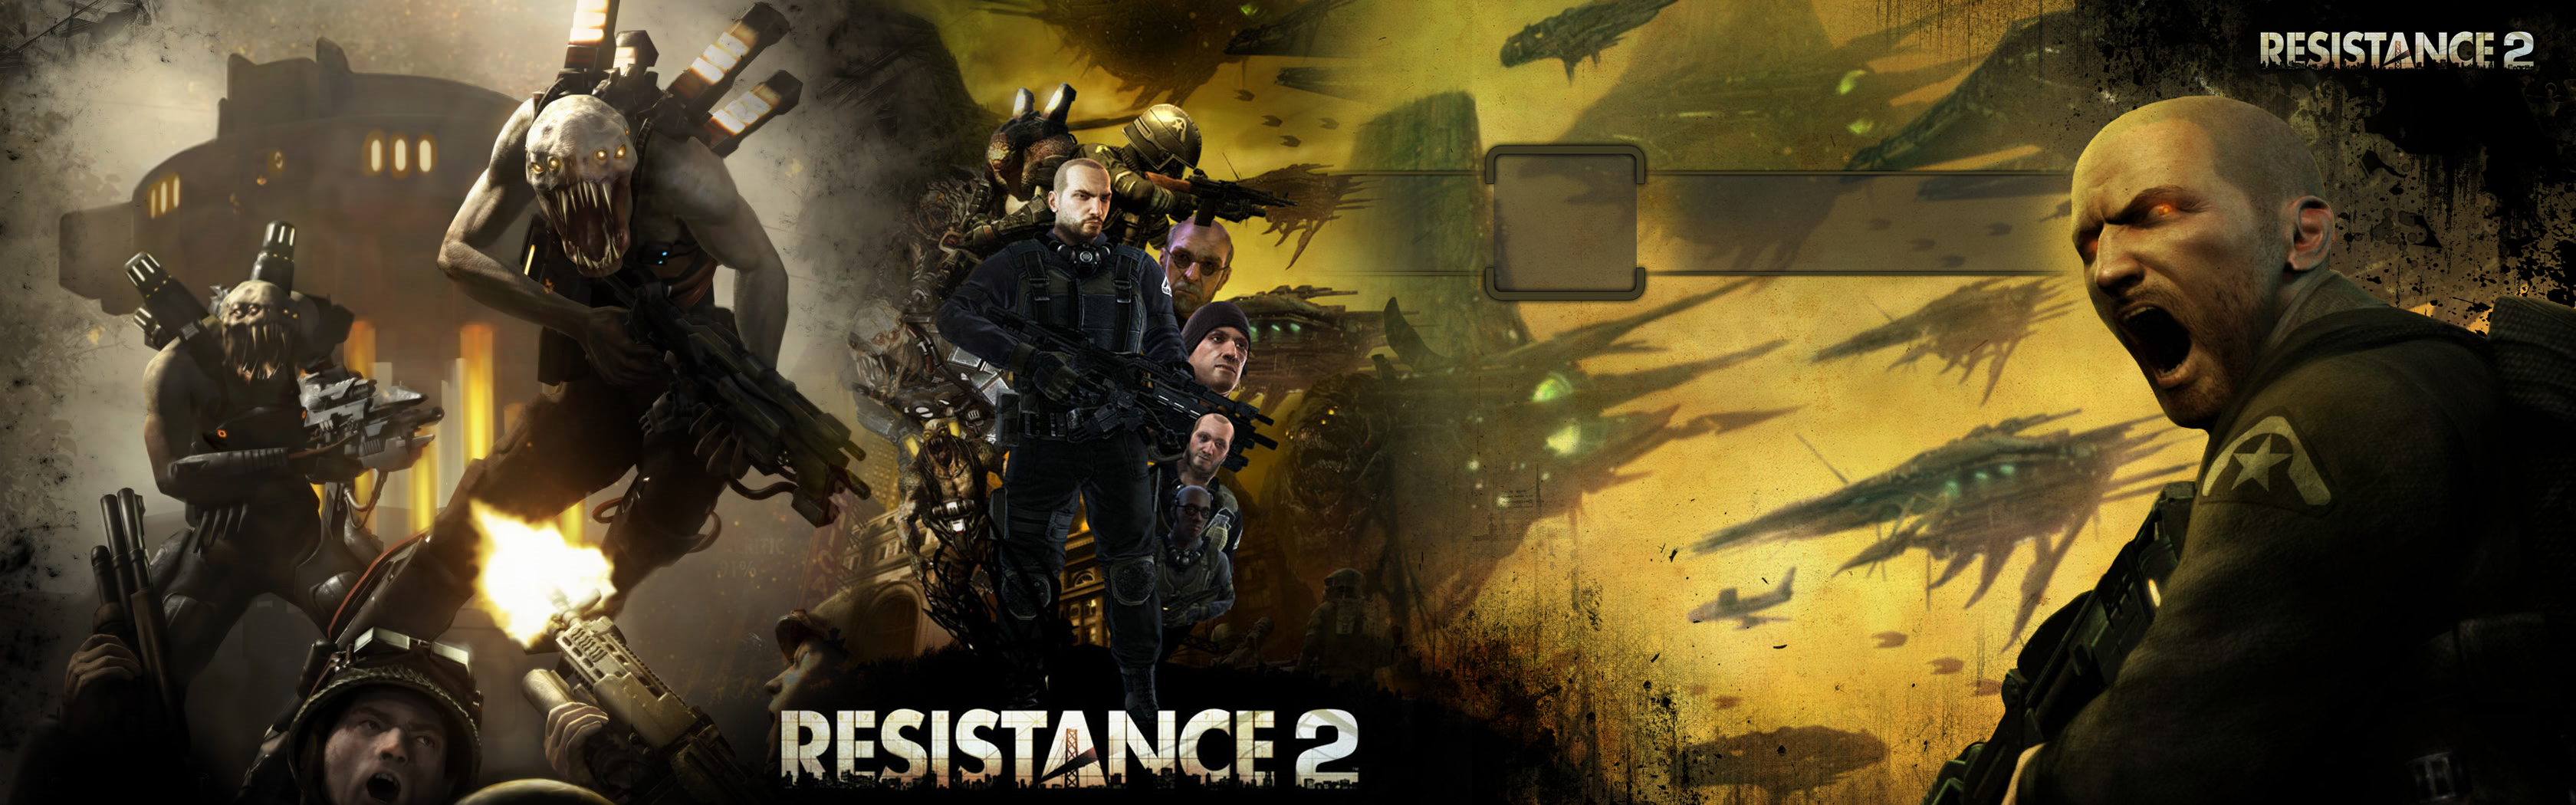 video game, resistance 2, resistance